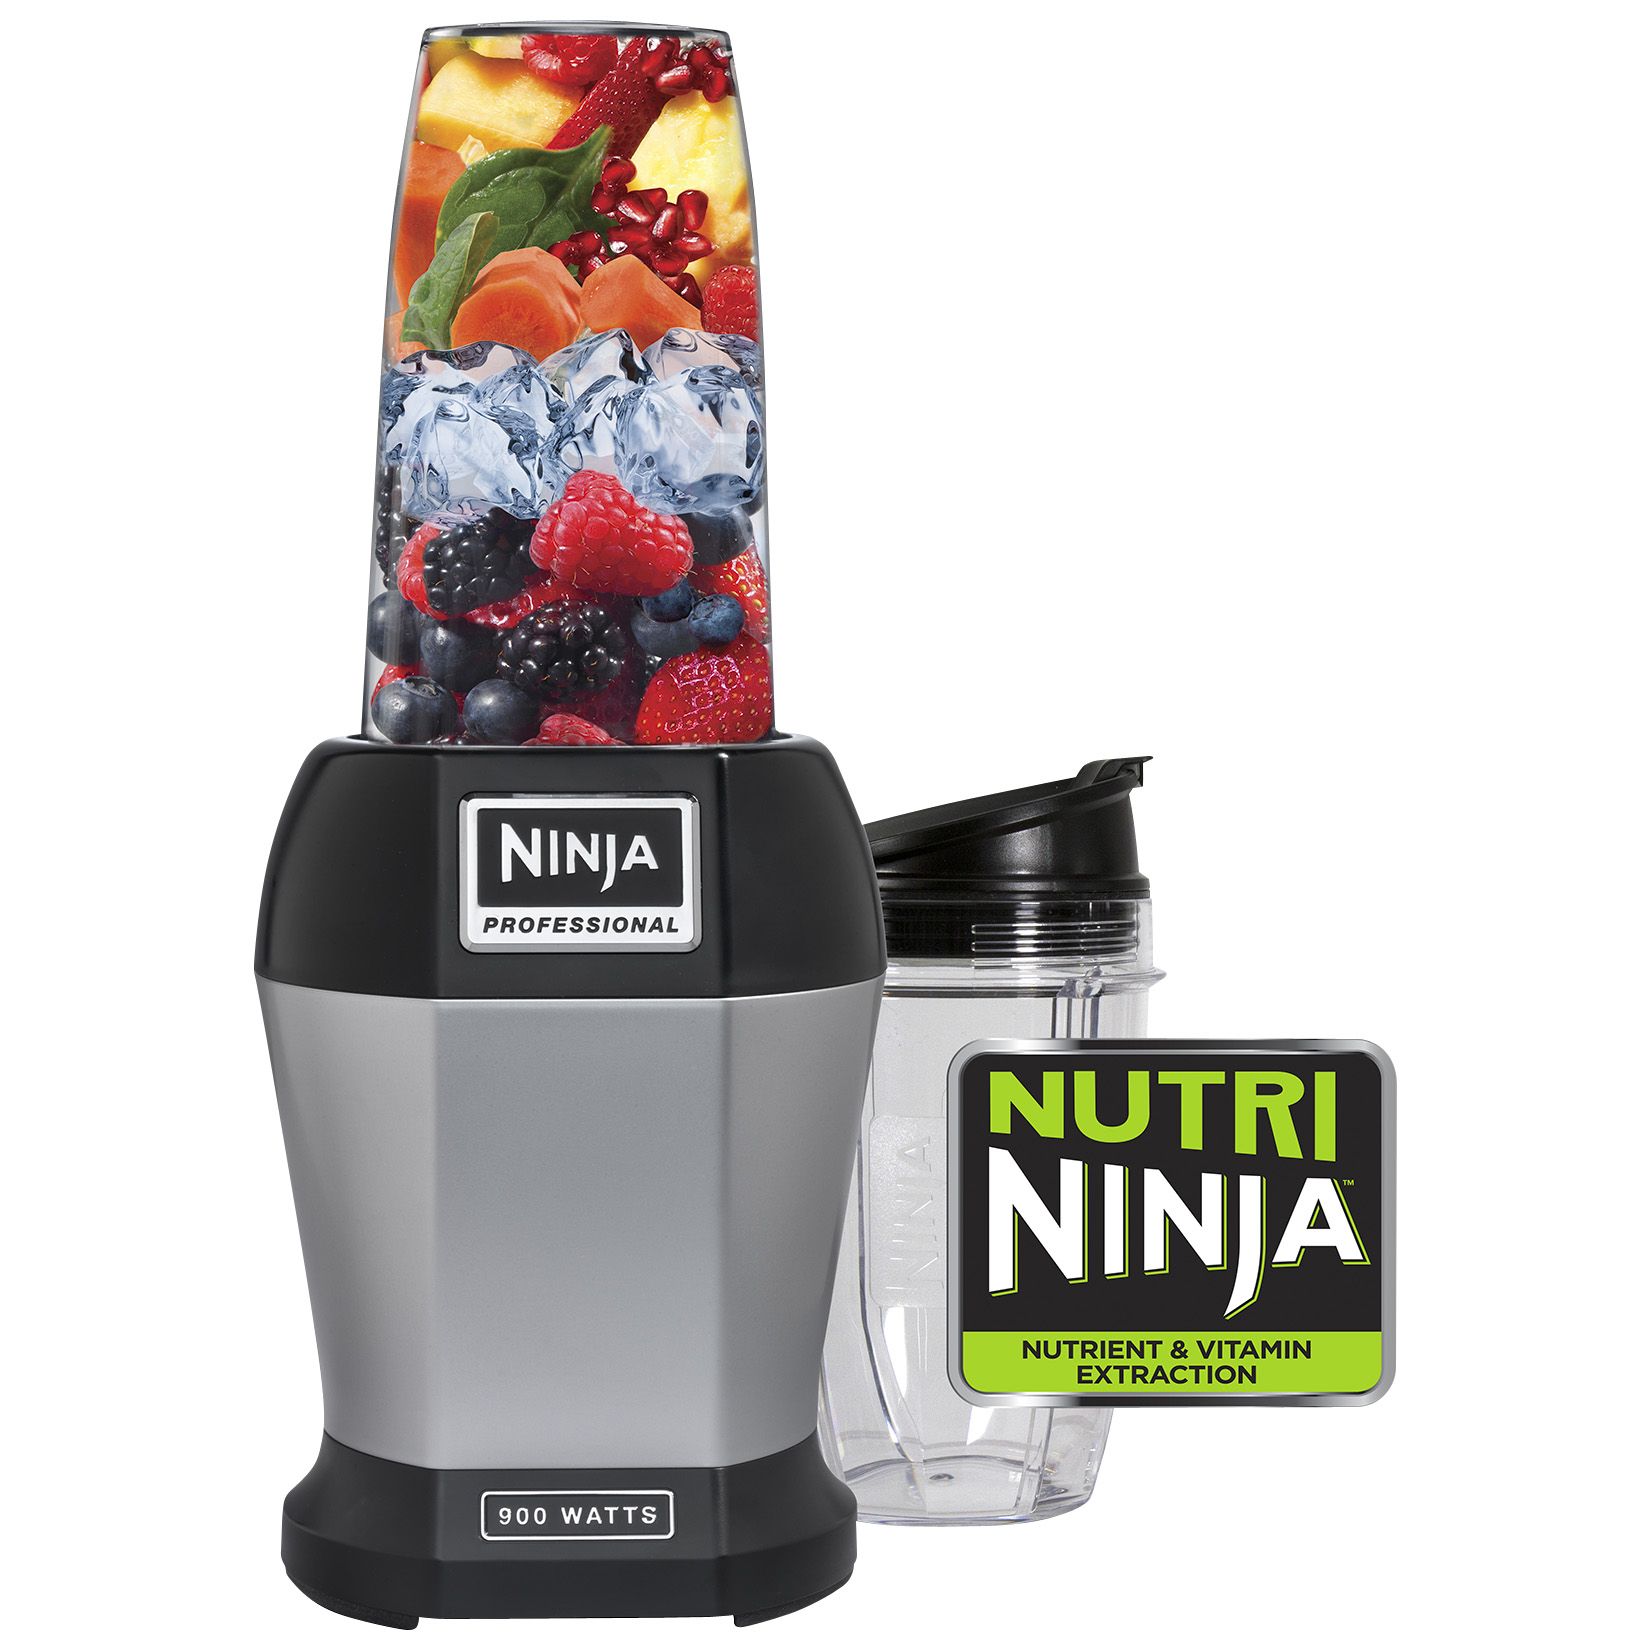 Fingerhut - Nutri Ninja Professional Nutrient Extractor